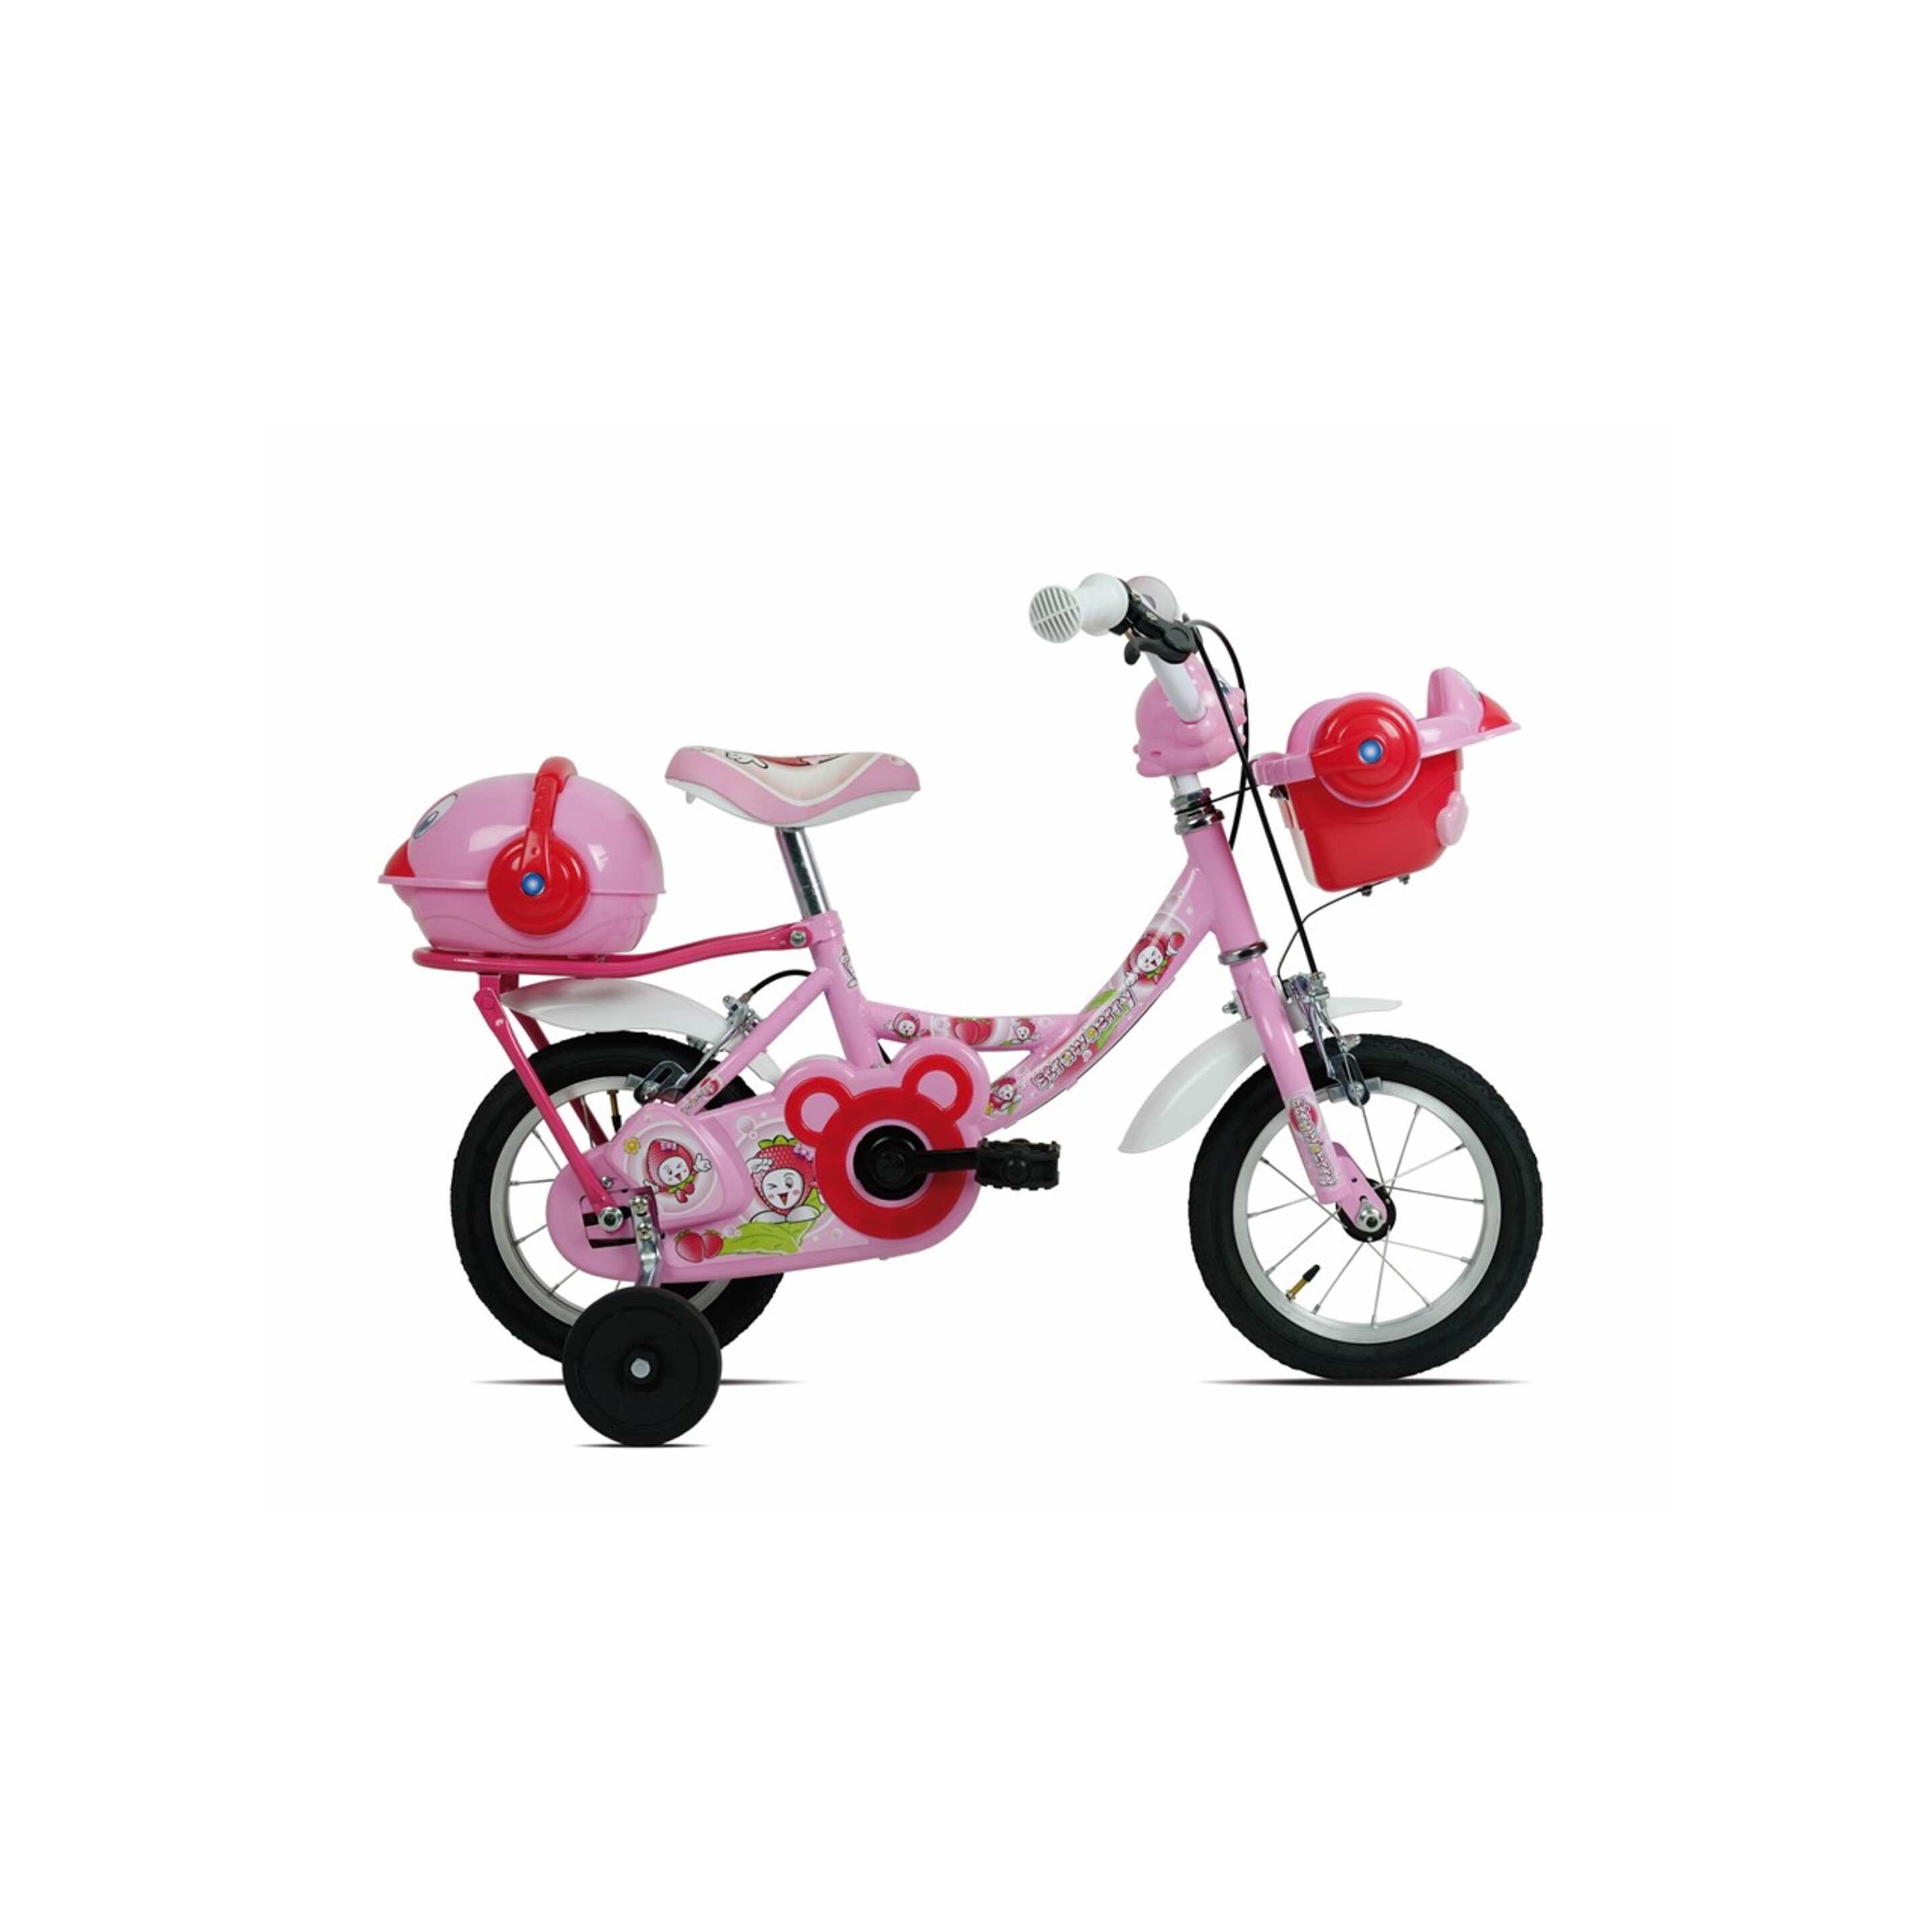 Bicicleta Infantil Game Boy 9770 Esperia - rosa - 